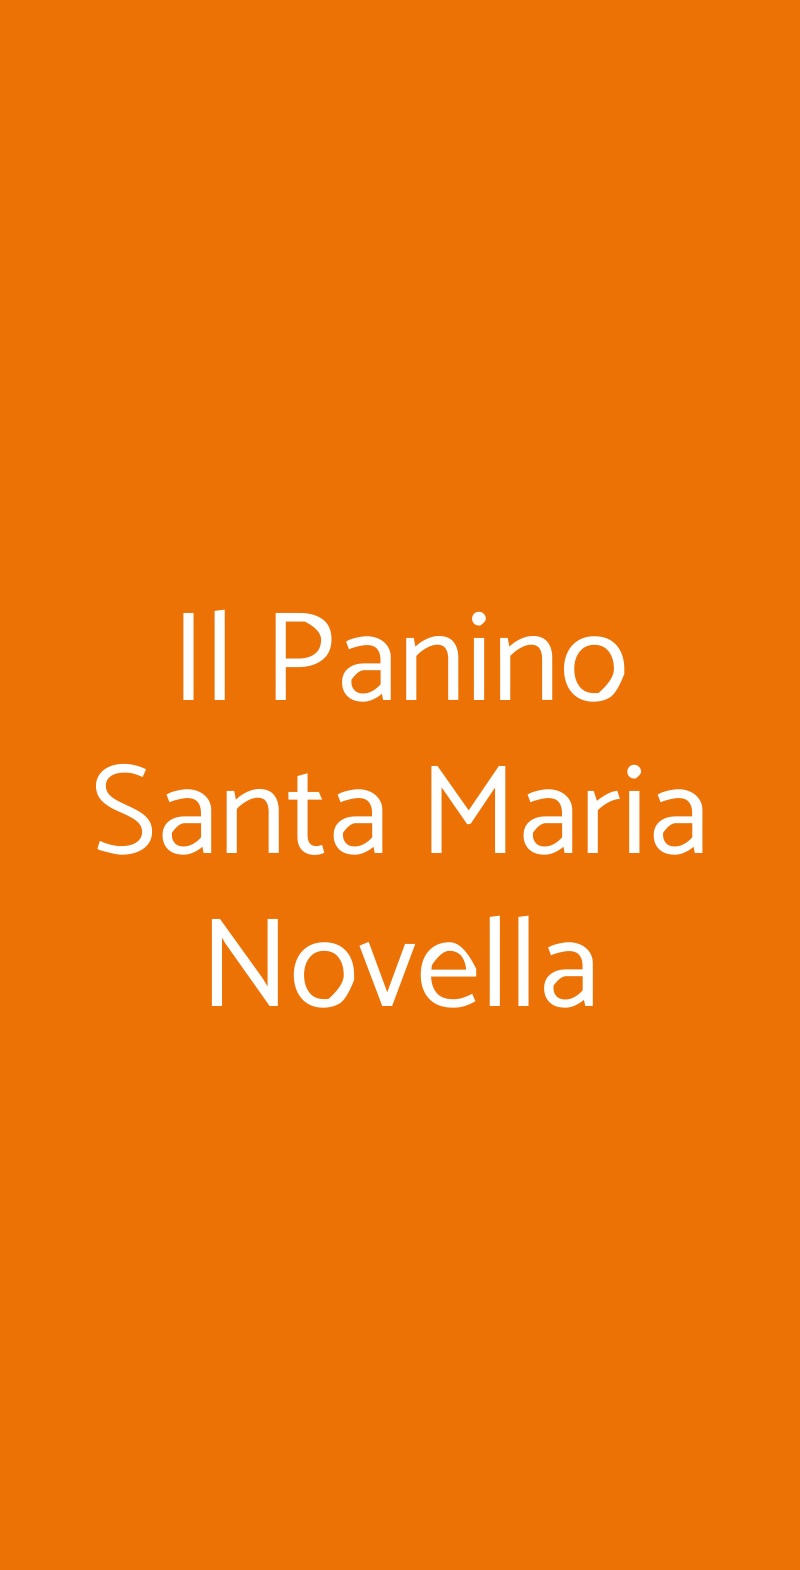 Il Panino Santa Maria Novella Firenze menù 1 pagina